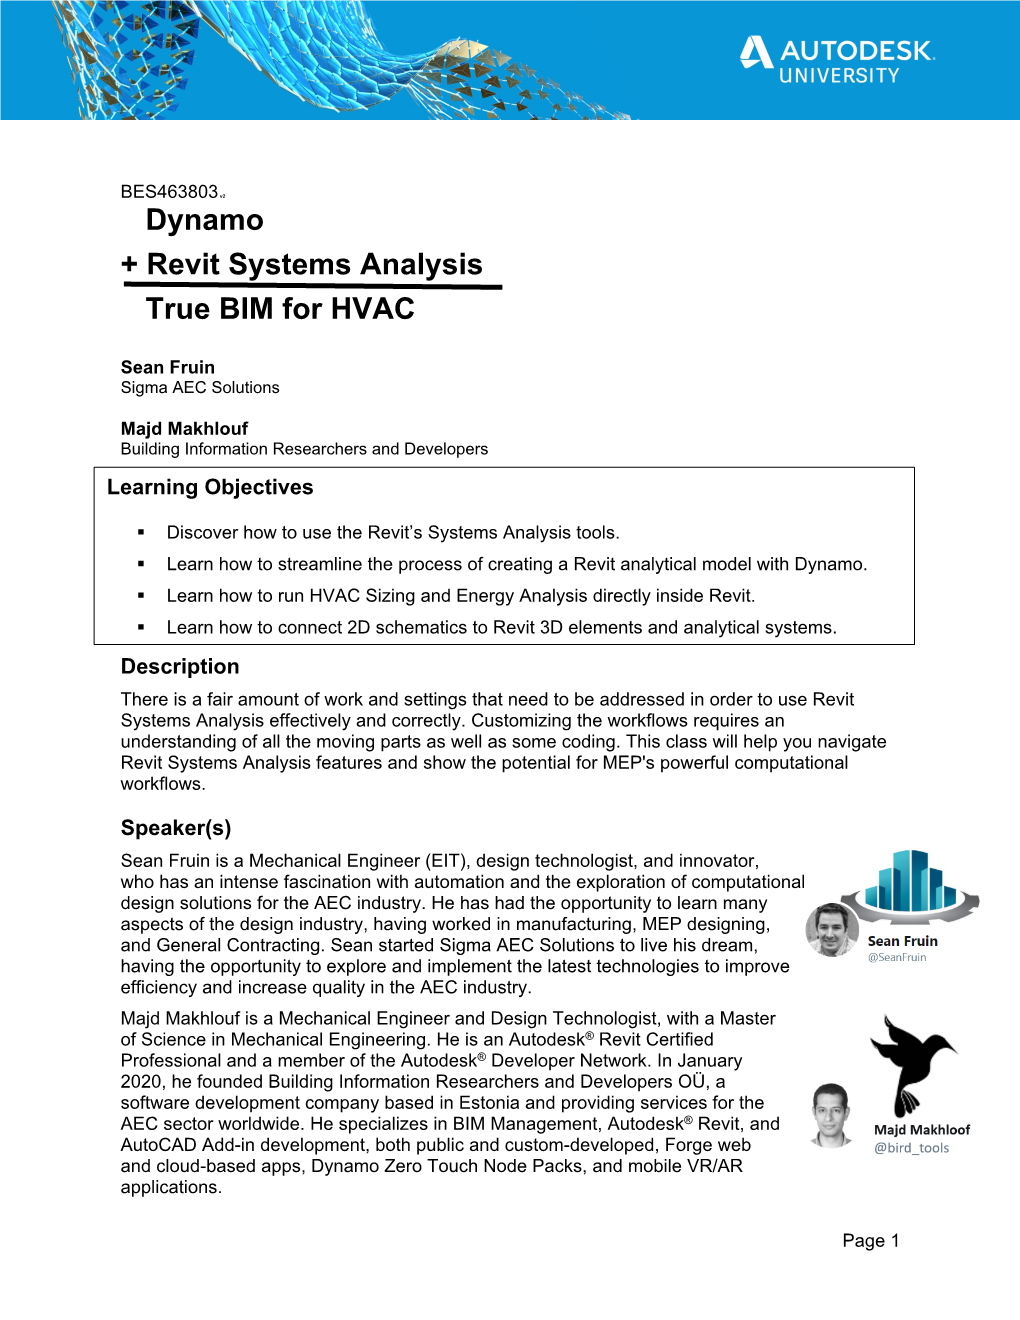 Dynamo + Revit Systems Analysis True BIM for HVAC